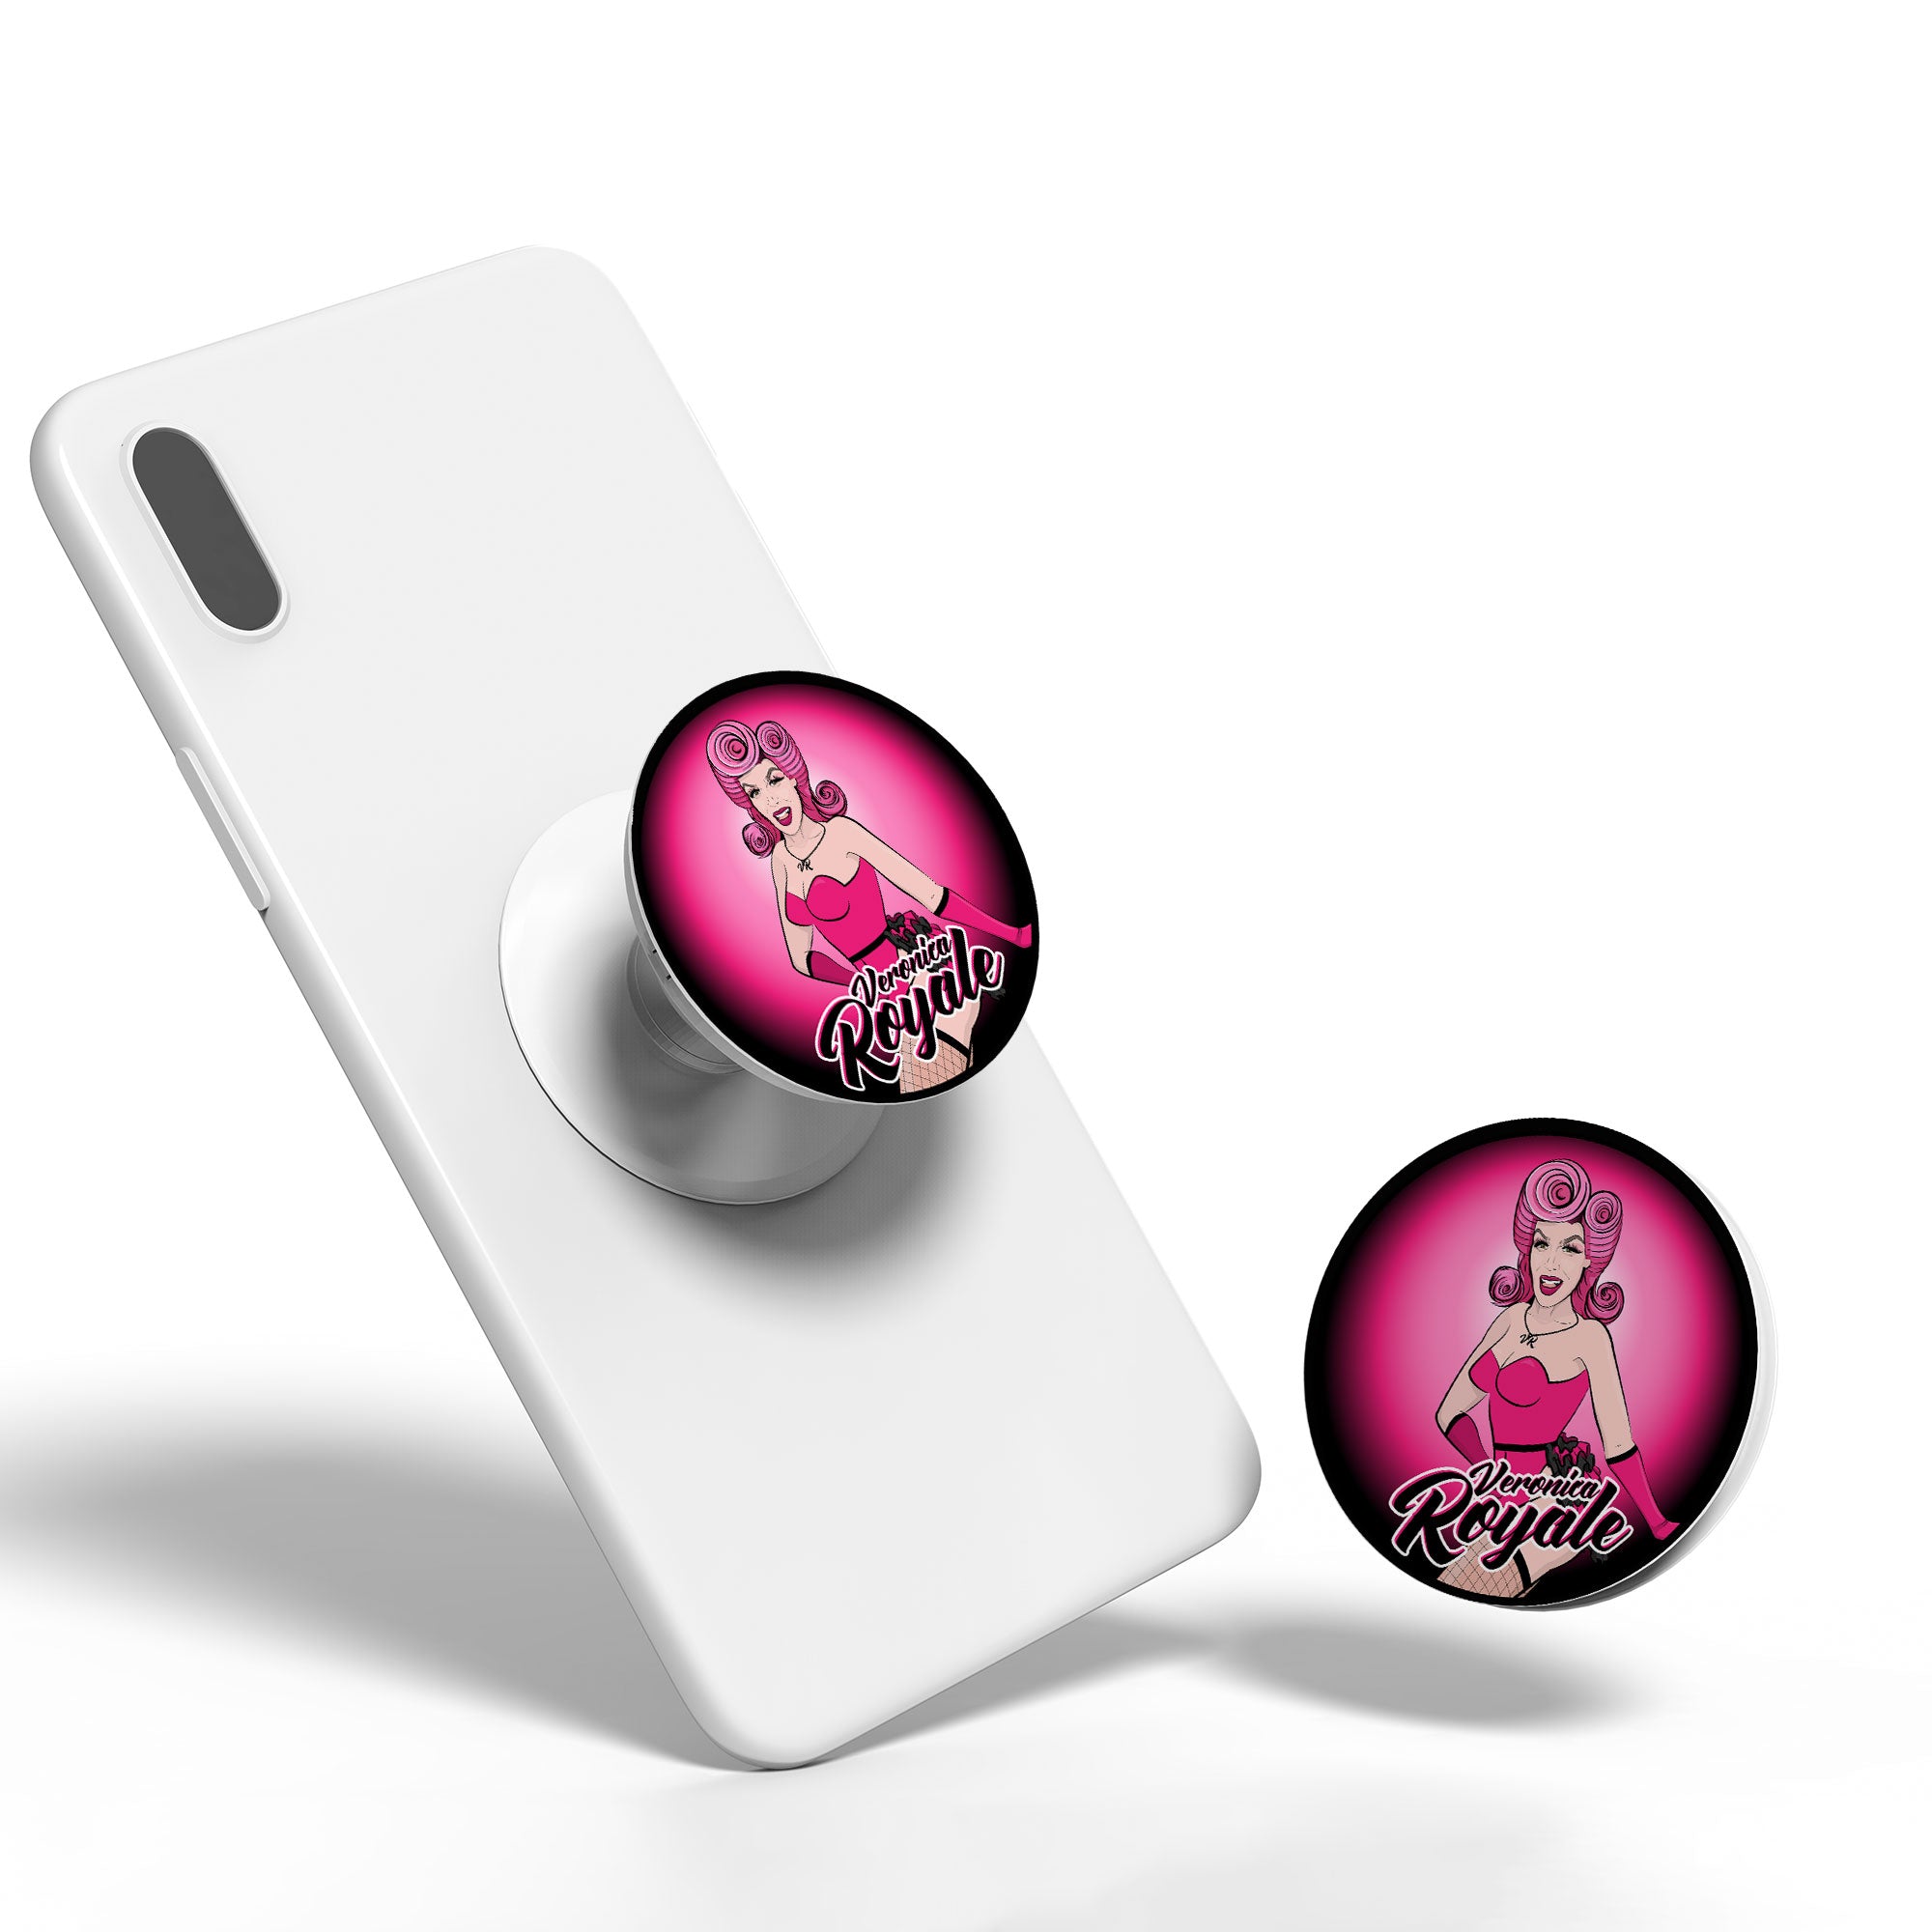 Veronica Royale - Logo Phone Holder